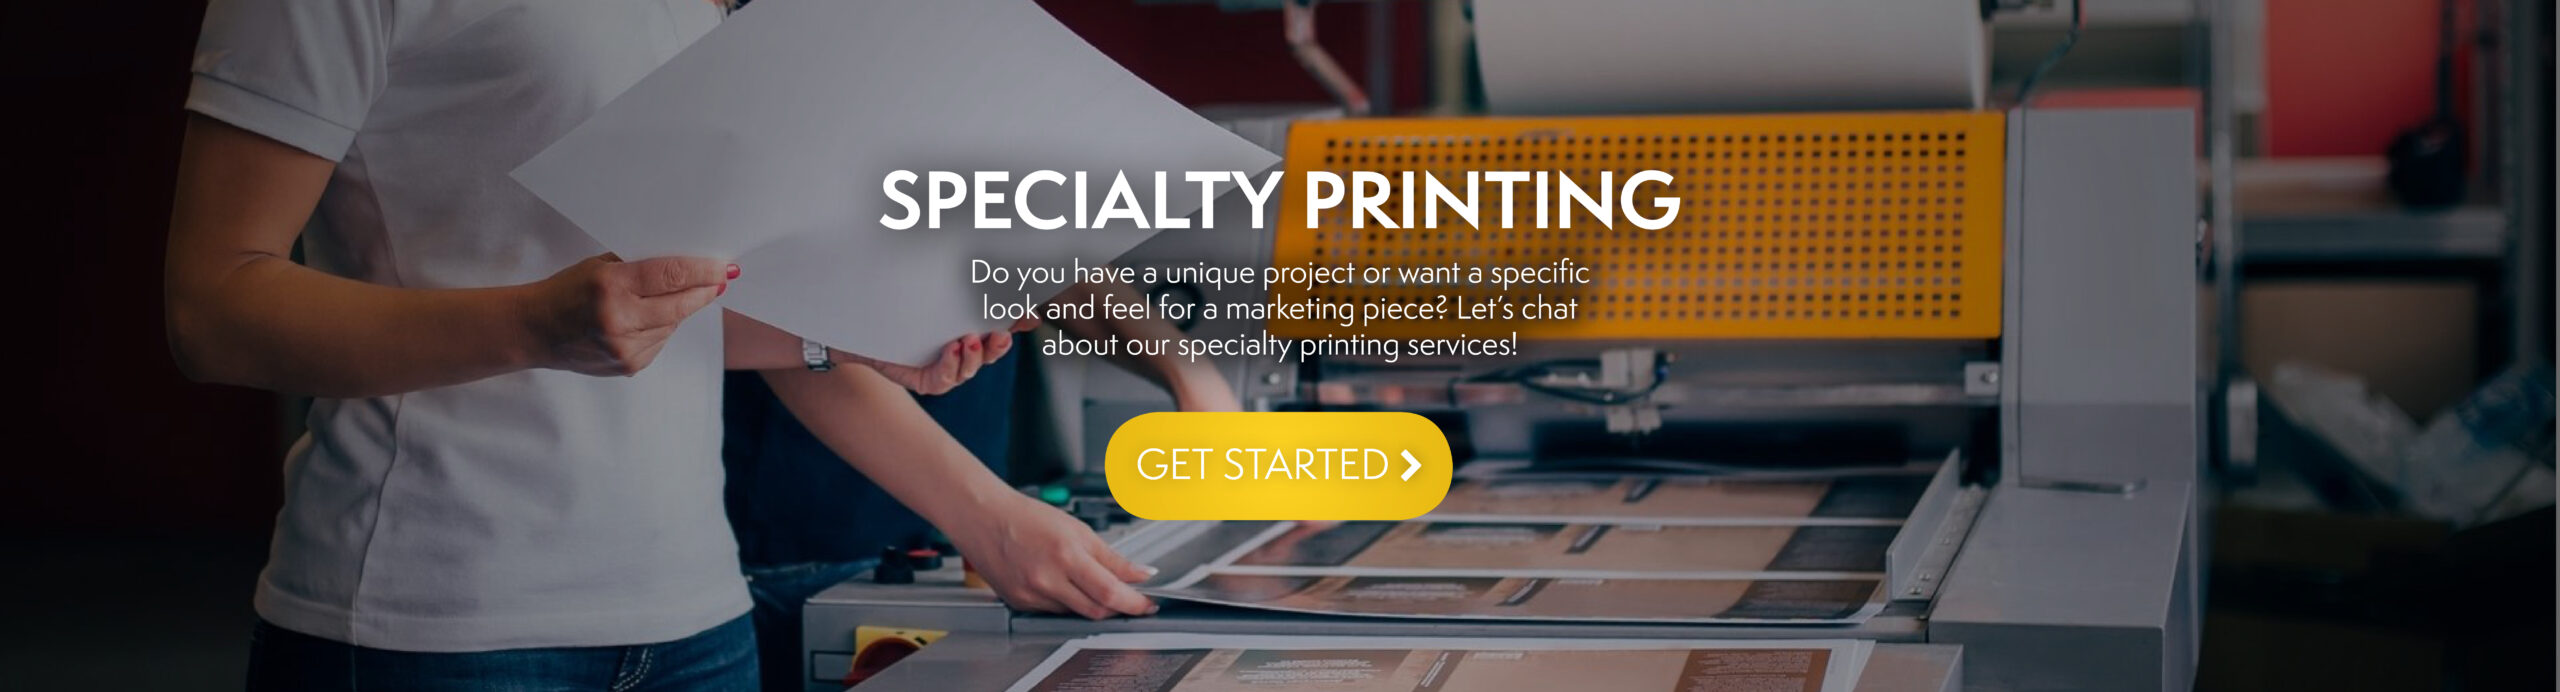 Specialty Printing slide